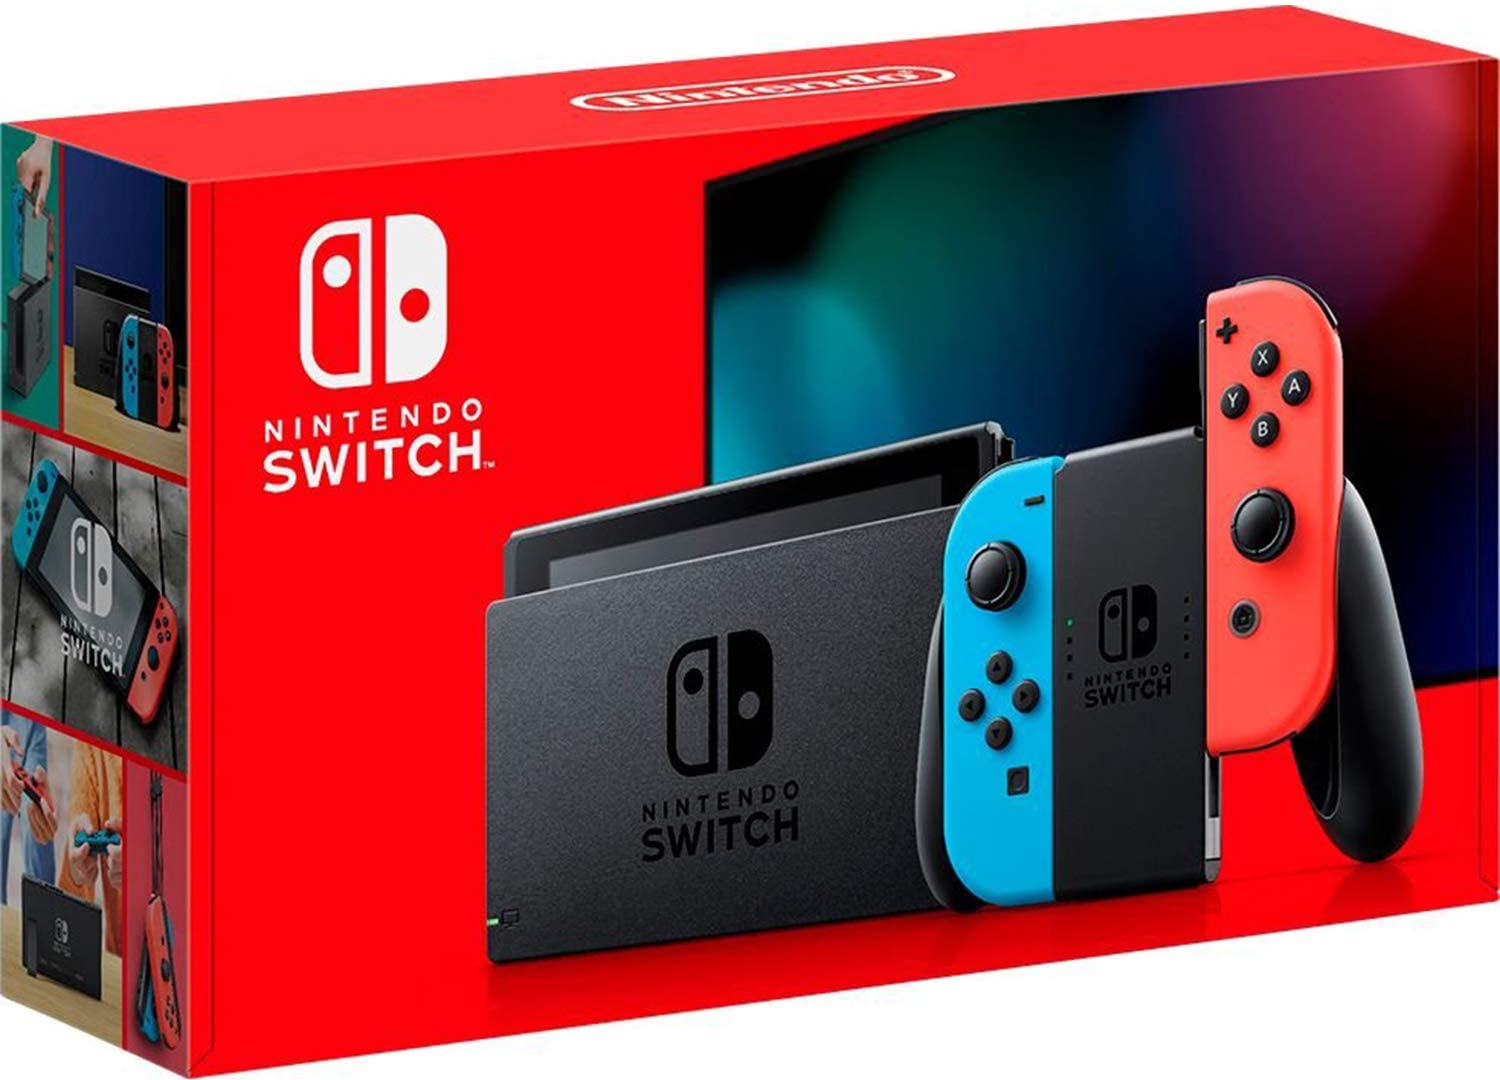 Nintendo Switch in a box